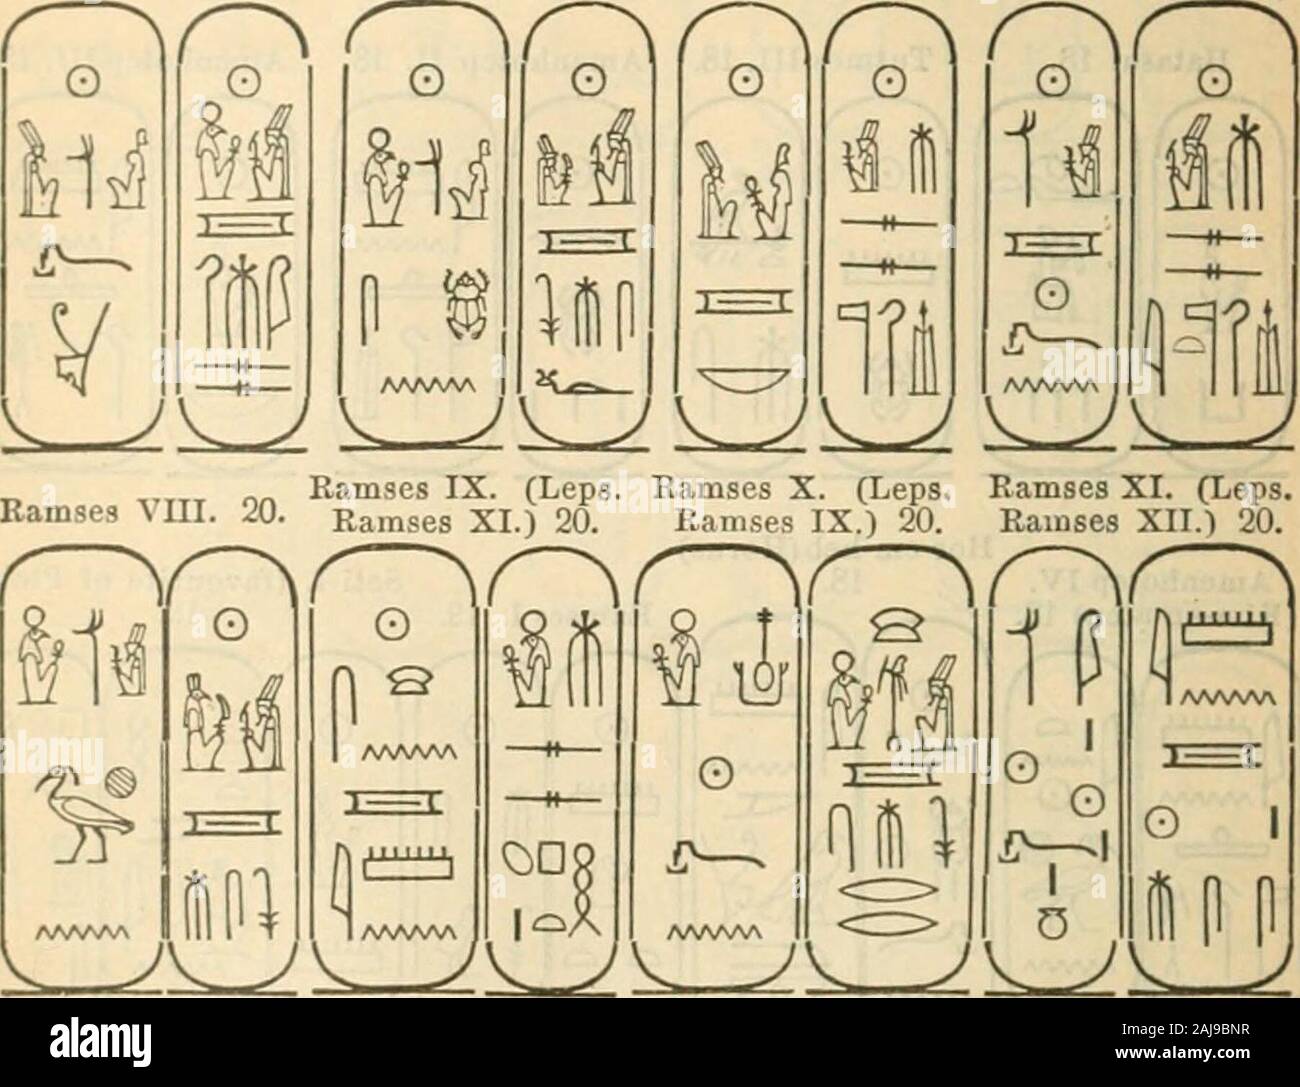 Egitto : manuale per i viaggiatori : parte prima, Basso Egitto, con il Fayum e la penisola del Sinai . ll.iuiMi IV. 20. Ramses V. 20. Ramses VI. 20. Ramses VII. 20.. Ramses XII. (Leps. Sheshenk (Sesonchis) I. 22.20. f , ^v NWW,^ o i Q B AAAAAA ^ J Osorkon I. 22. f ft =i f( (J AAAAA Sheshenk IV. 23. Bokenranf (Uocchoris).24. 6 Takel.it (Tiglath) I. 22. Foto Stock